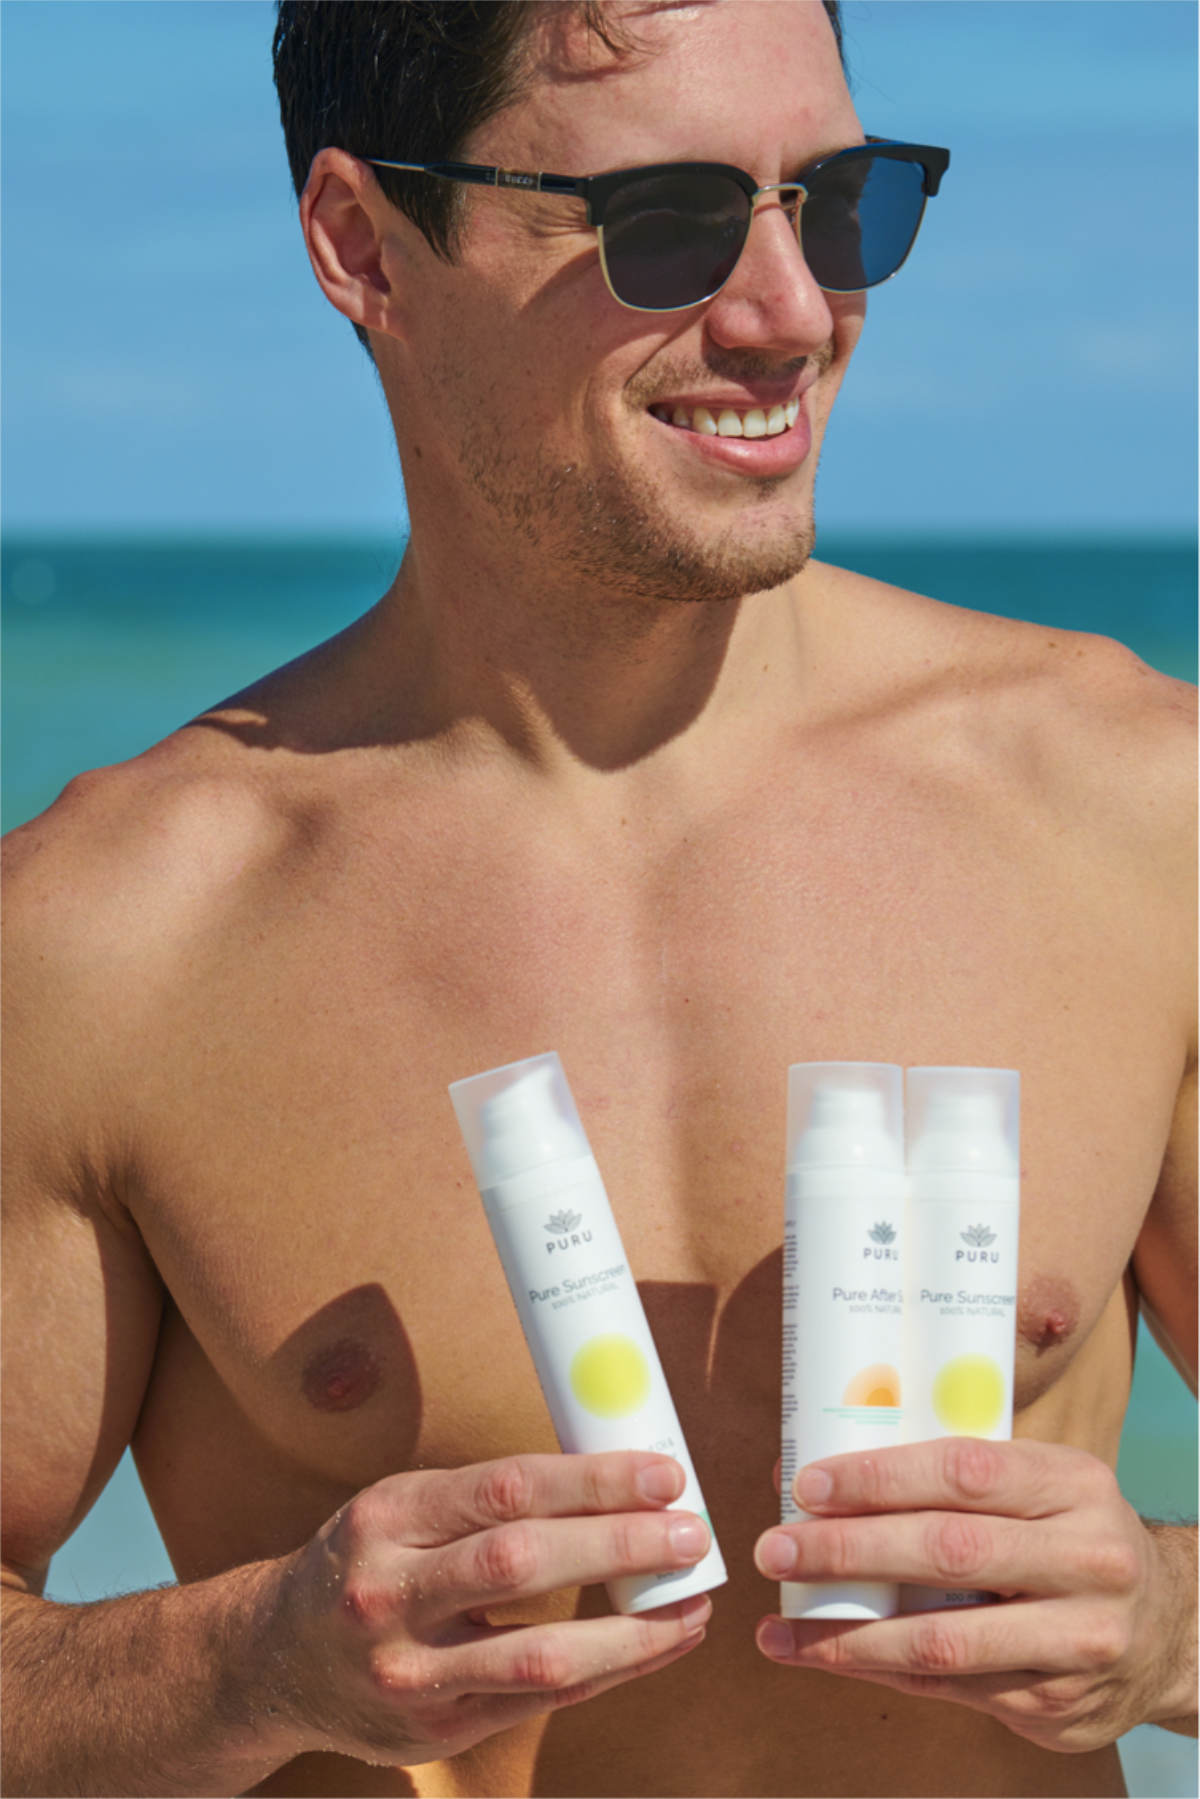 PURU Launches New Luxury 100% Natural Sunscreen